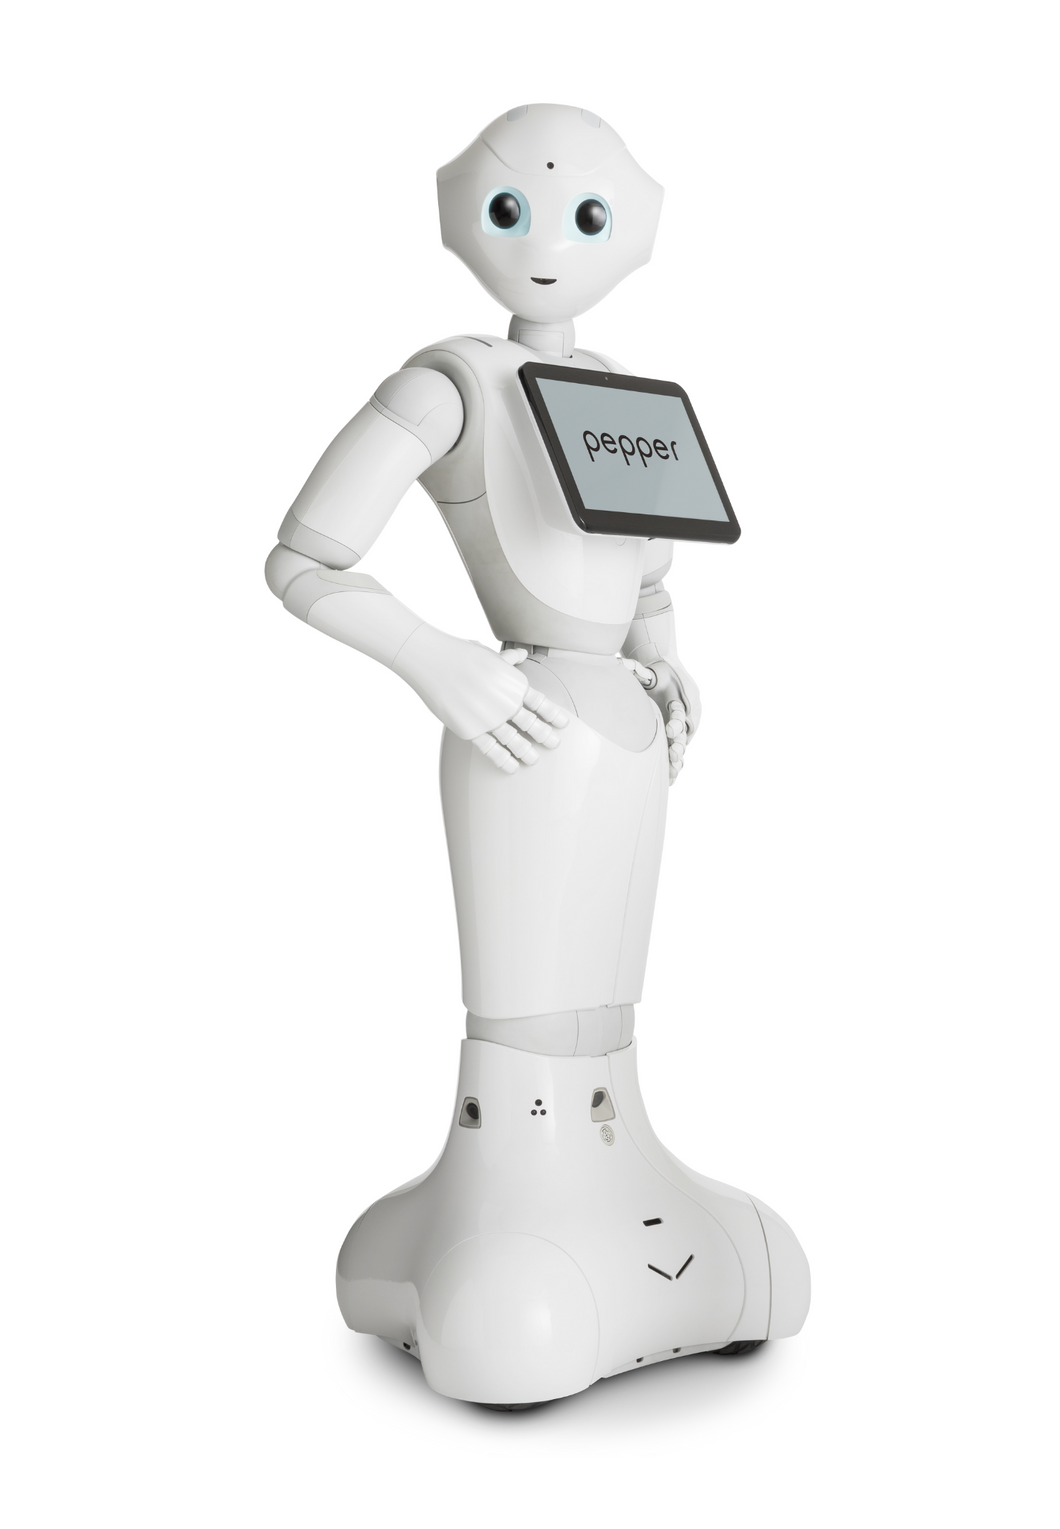 Pepper | The sociable humanoid robot by SoftBank Robotics